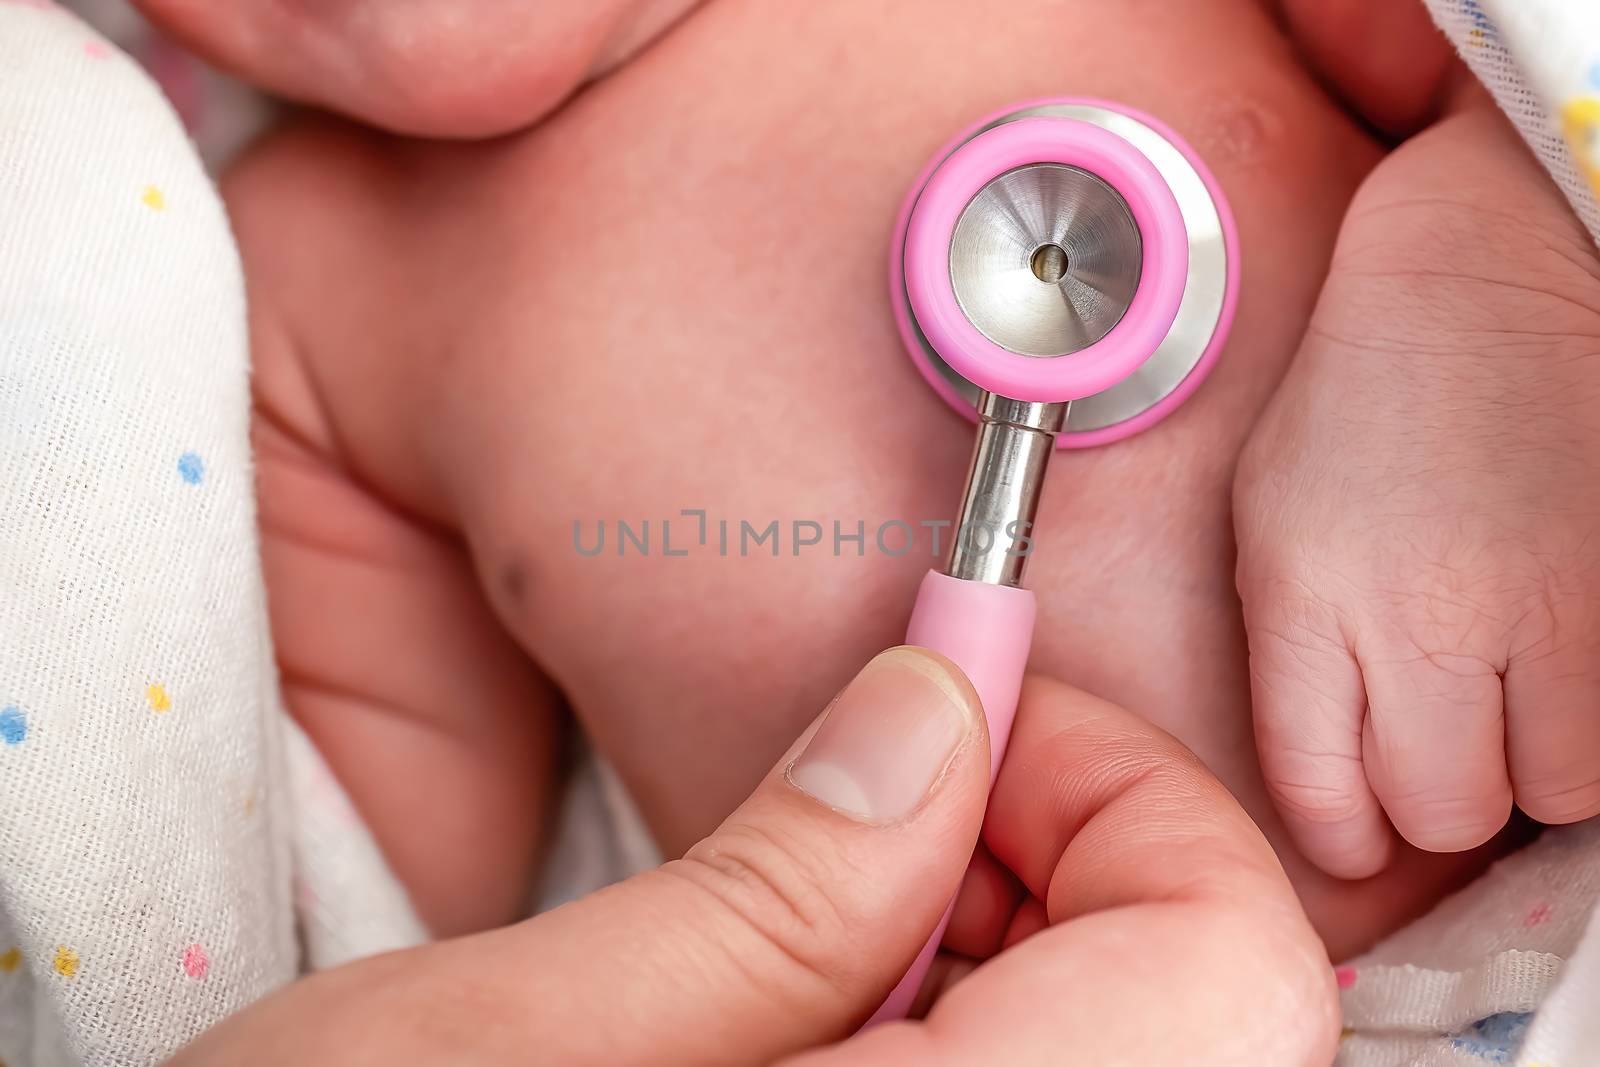 A nurse using a stethoscope to examine a newborn baby's heart